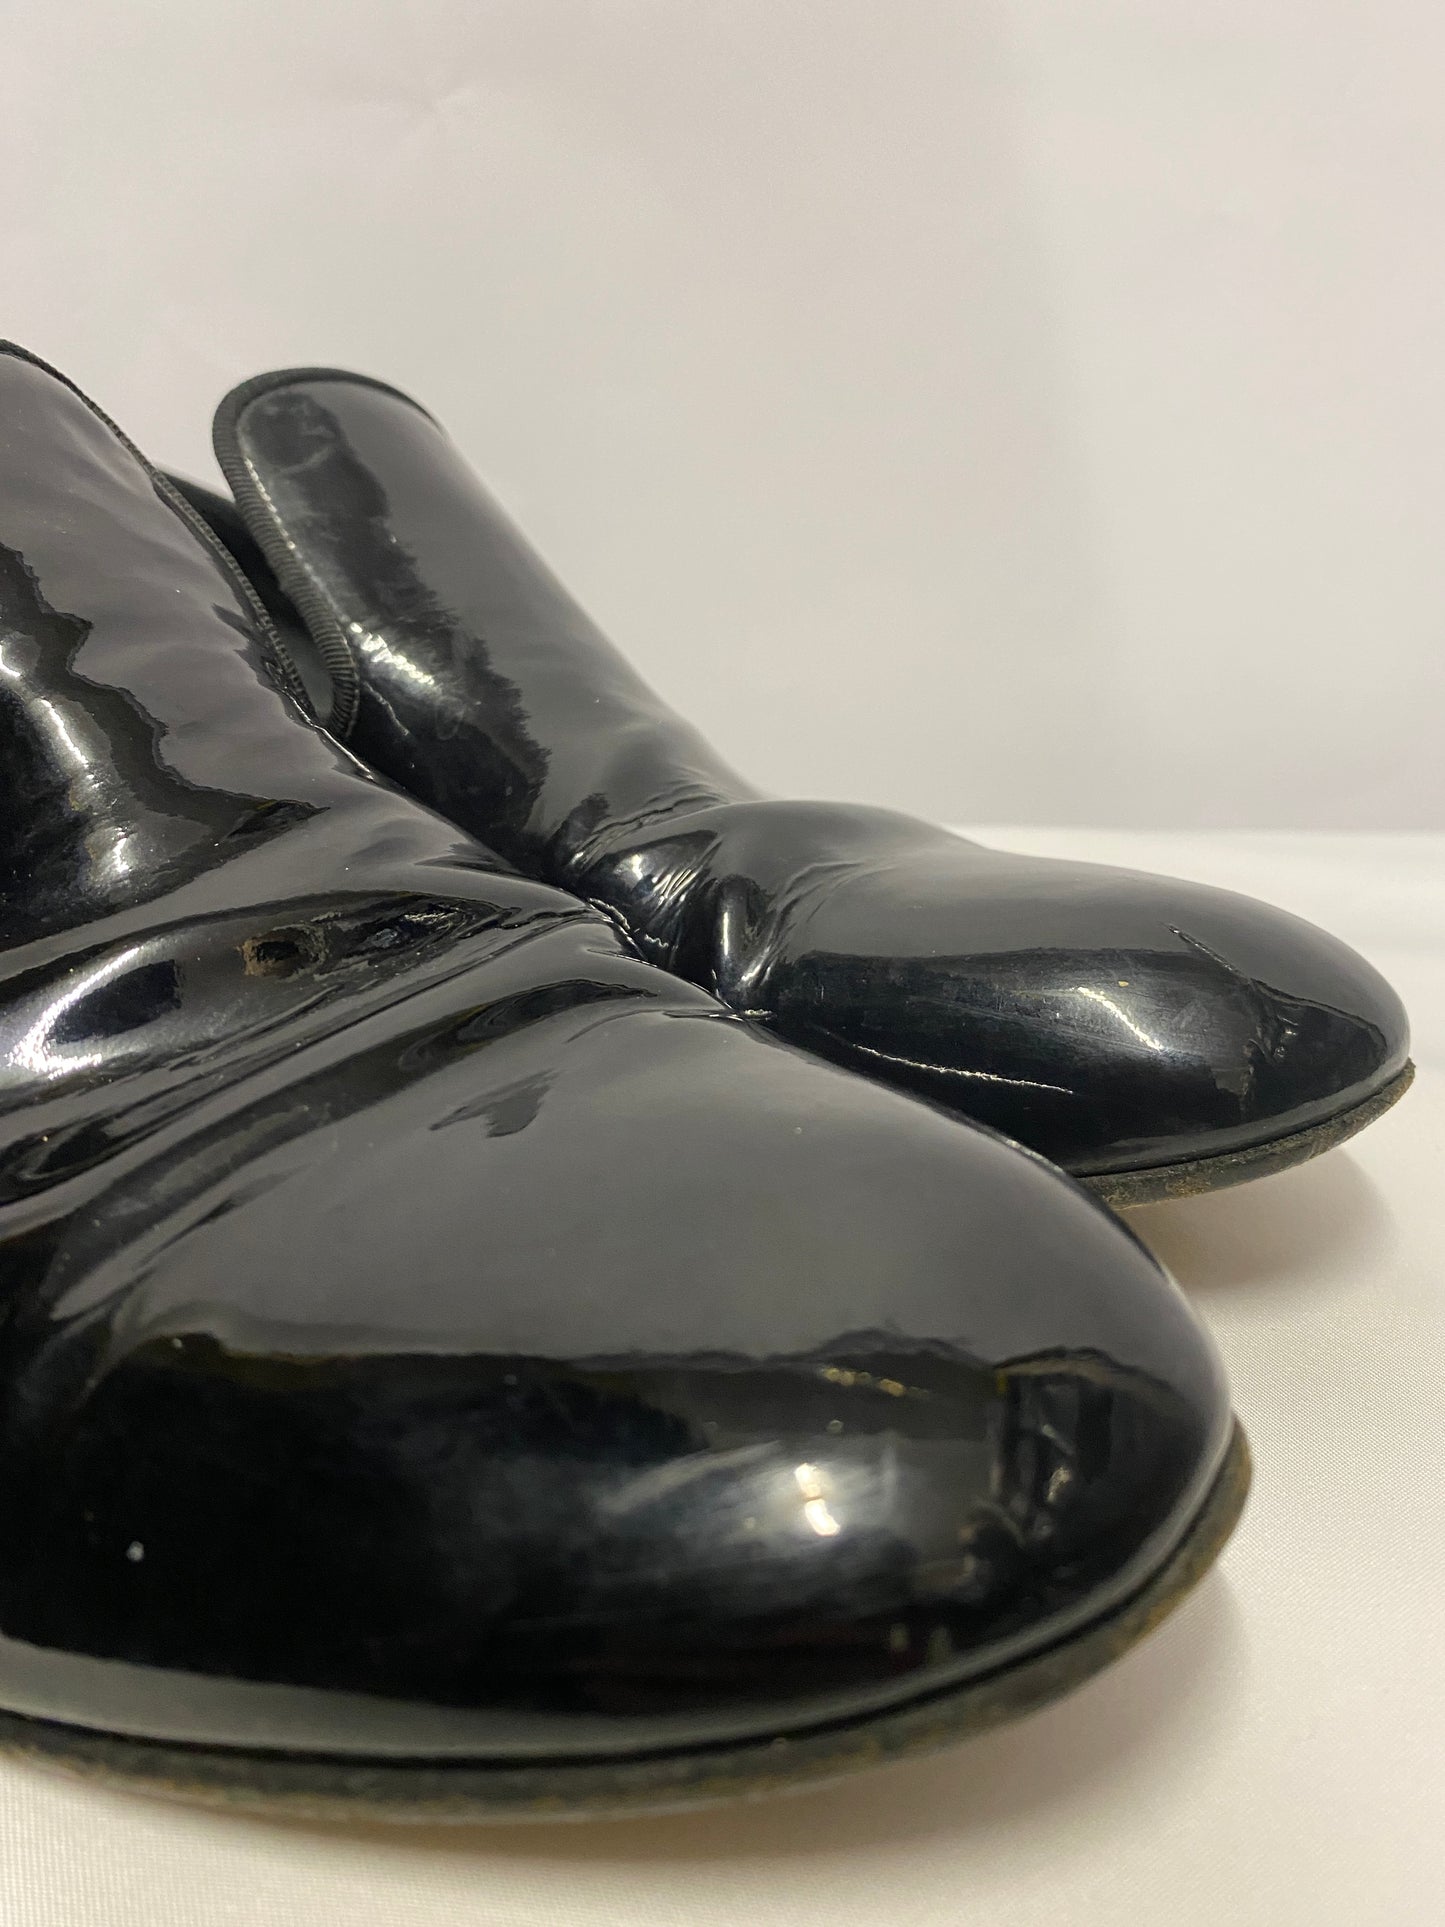 Celine Black Patent Leather Slip On Shoes 6 1/2